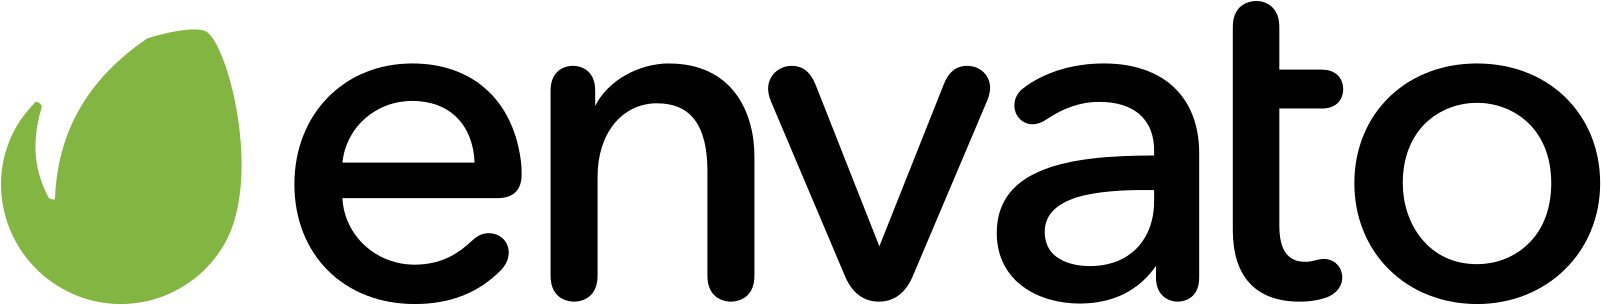 Envato_Logo